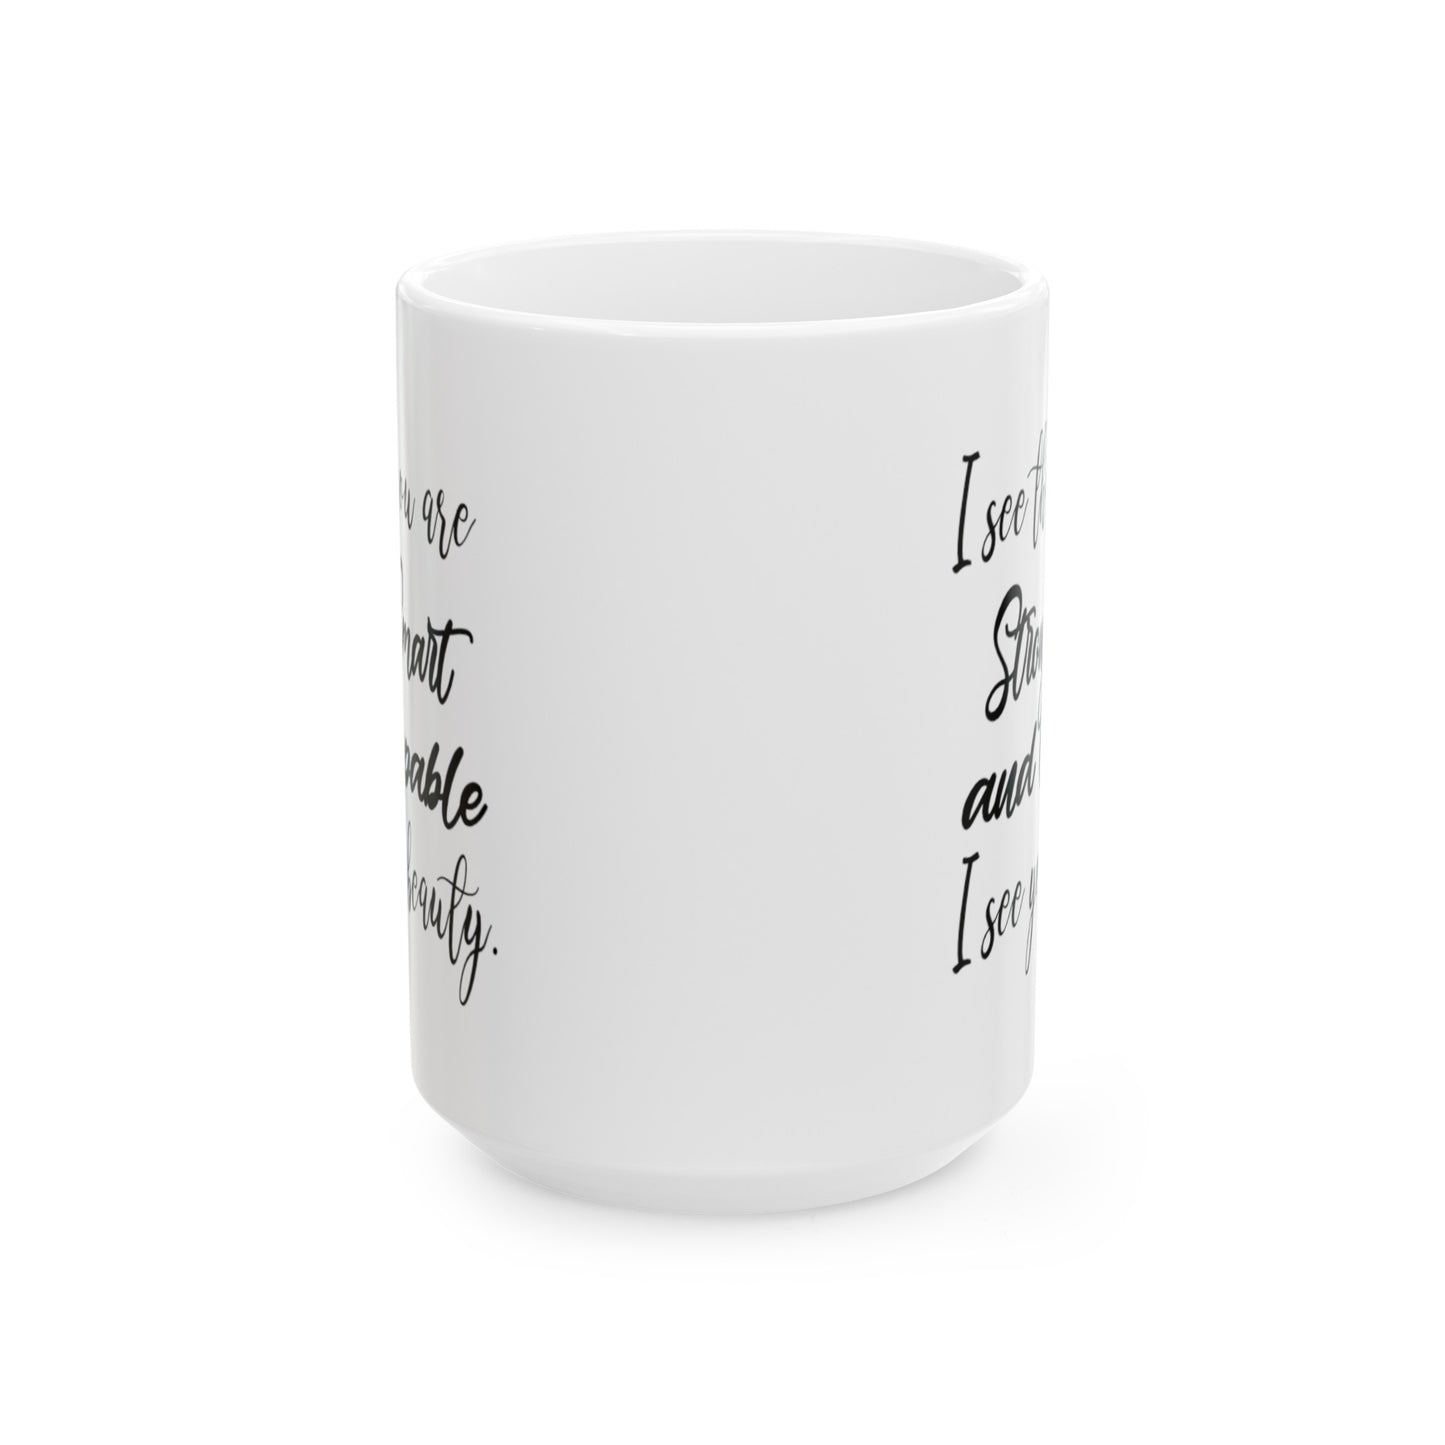 Smart Strong Capable Coffee Mug - Double Sided White Ceramic 15oz by TheGlassyLass.com